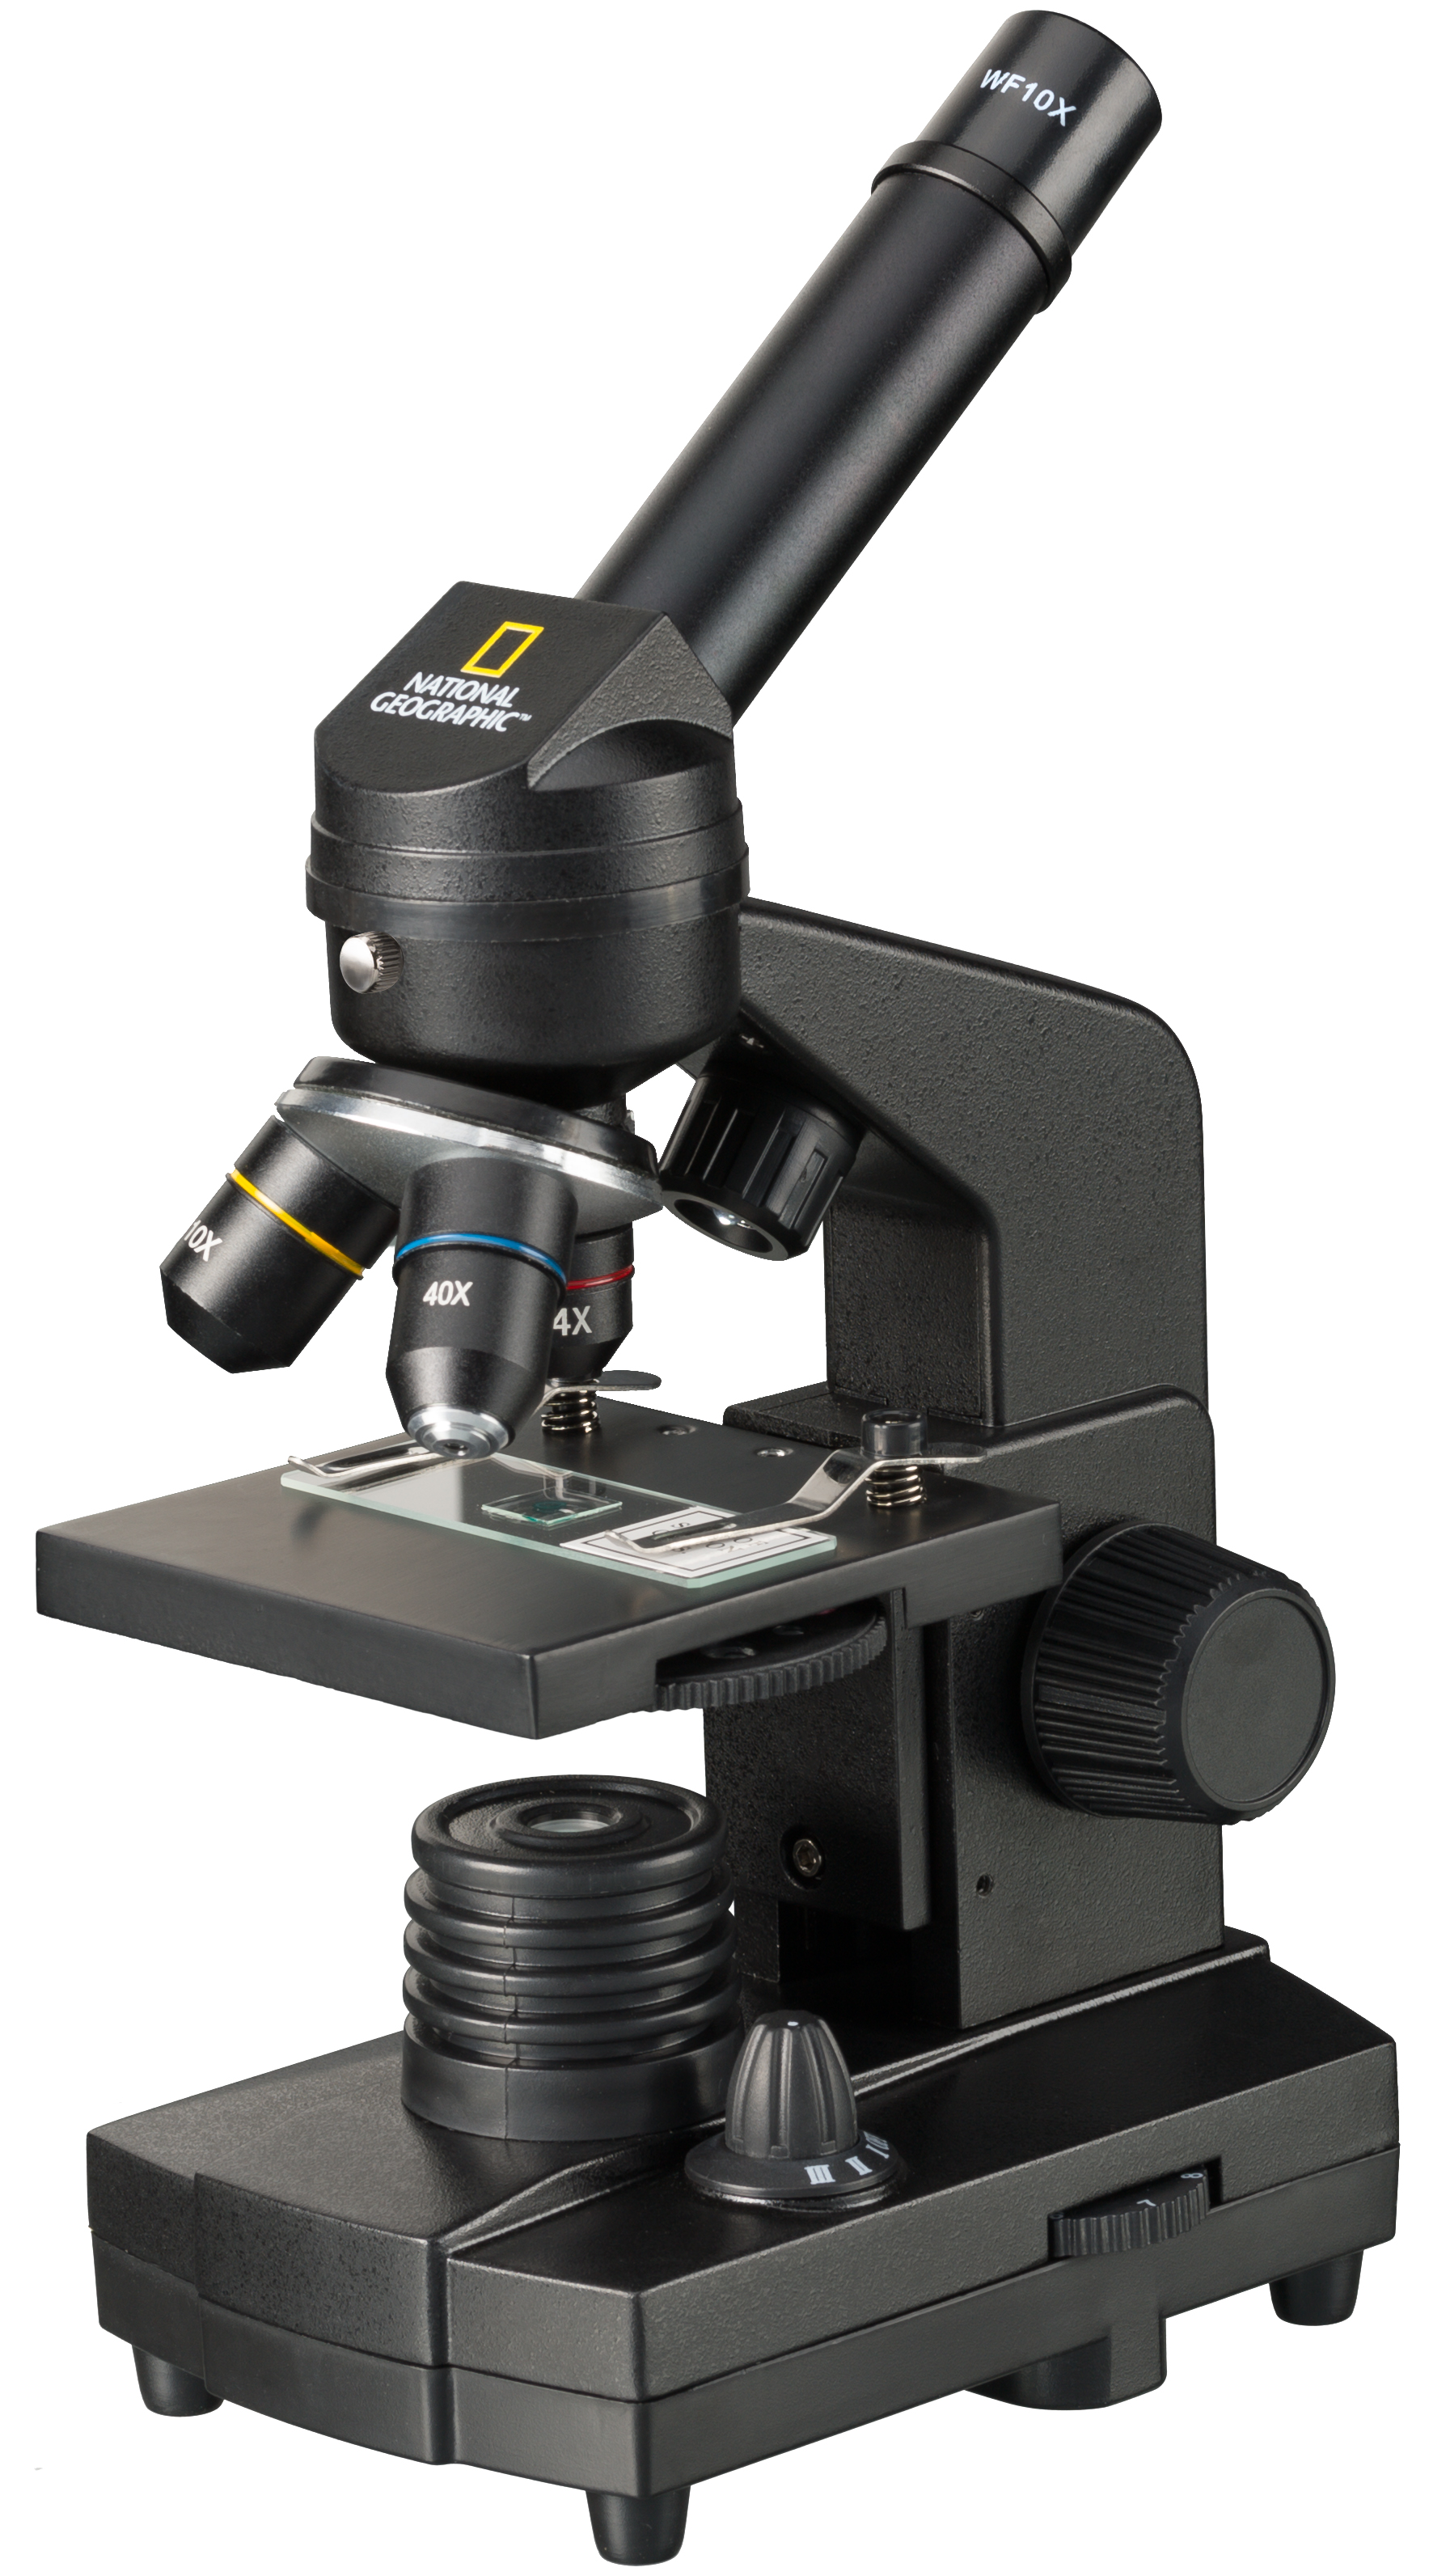 NATIONAL GEOGRAPHIC 40x-1280x Mikroskop inkl. Smartphone Halterung